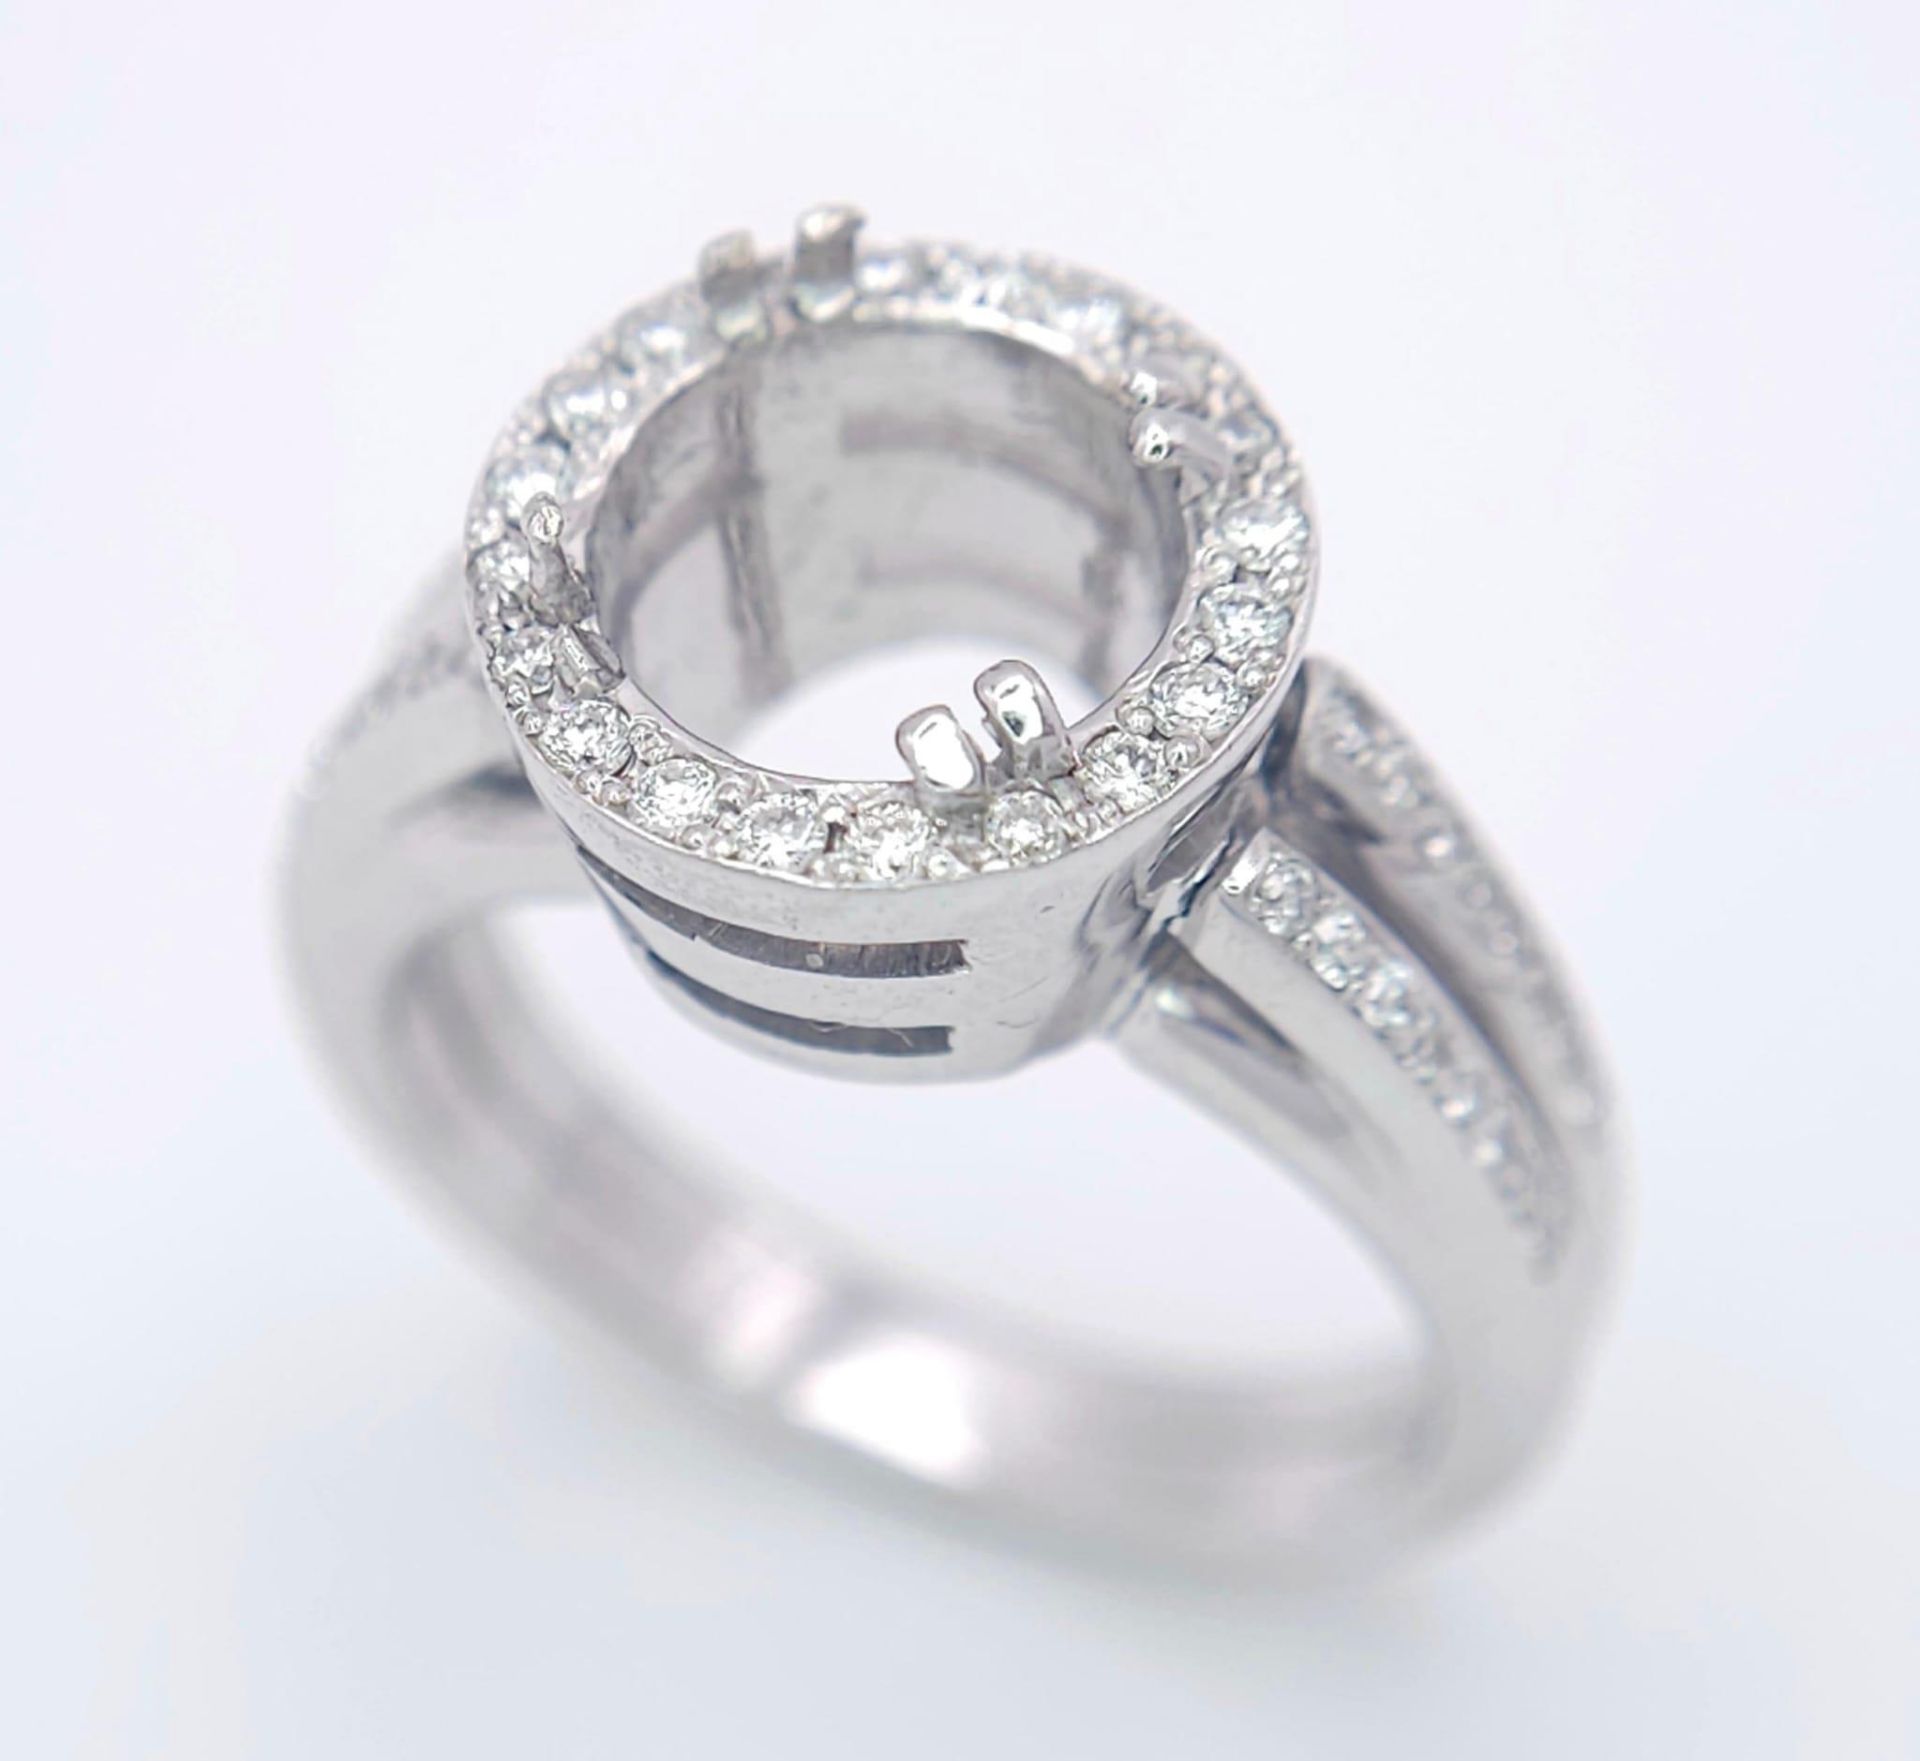 AN 18K WHITE GOLD DIAMOND RING - SET HALO MOUNT WITH DIAMOND SET SPLIT SHOULDERS. SHANK RING MOUNT